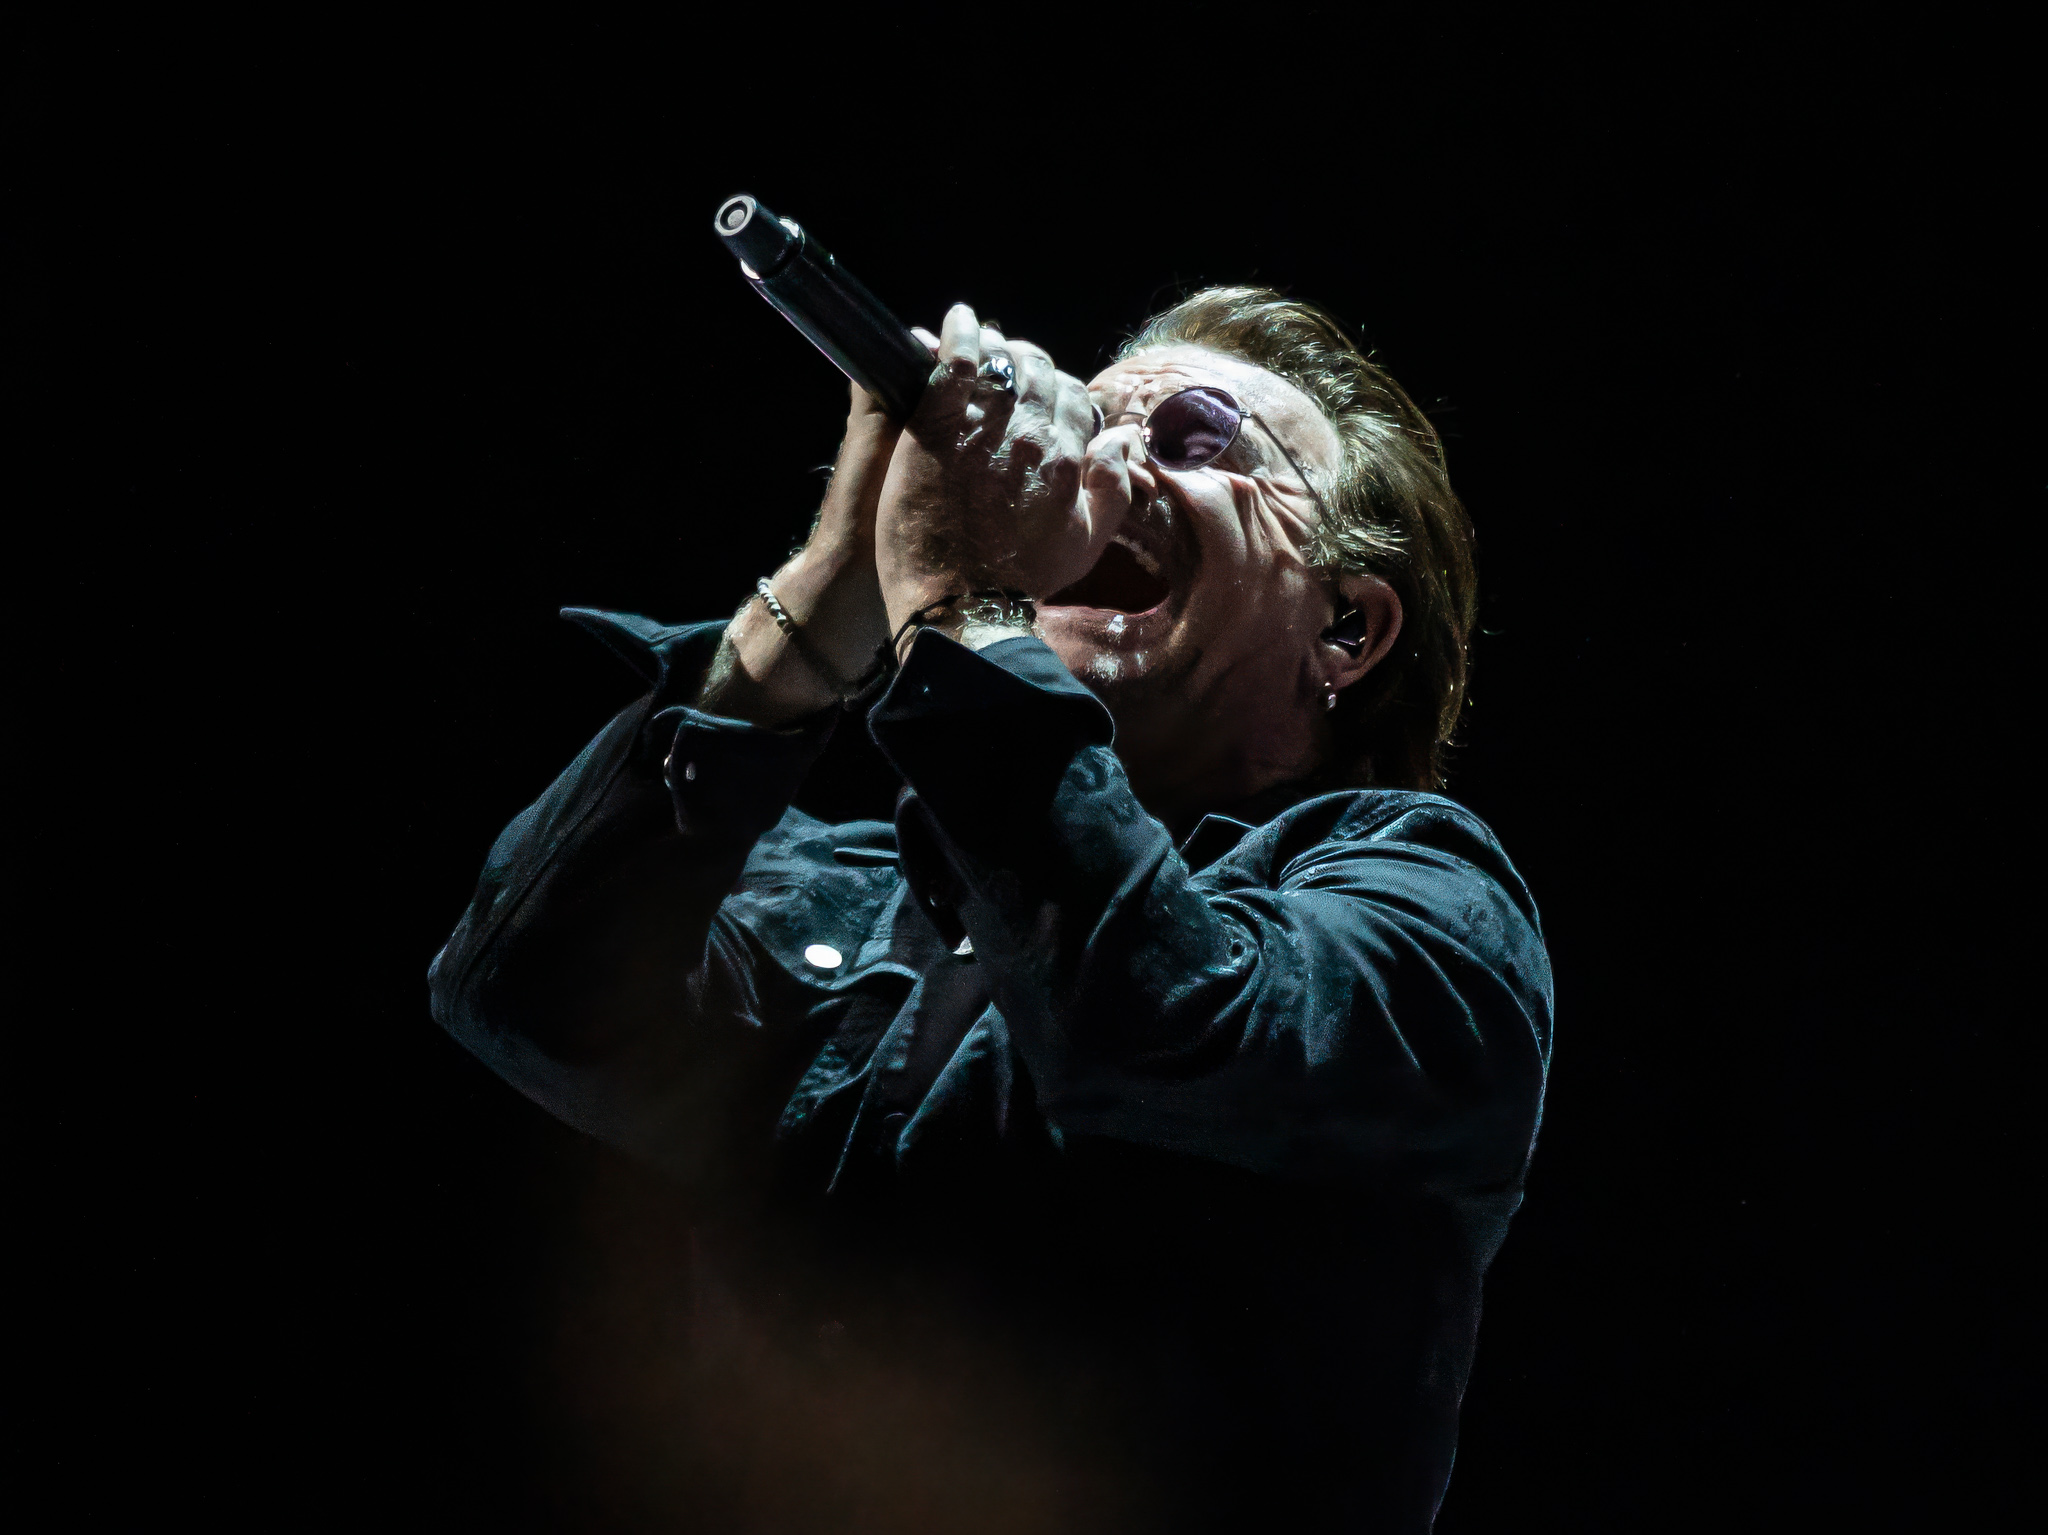 Bono by Bullet-ray Photography